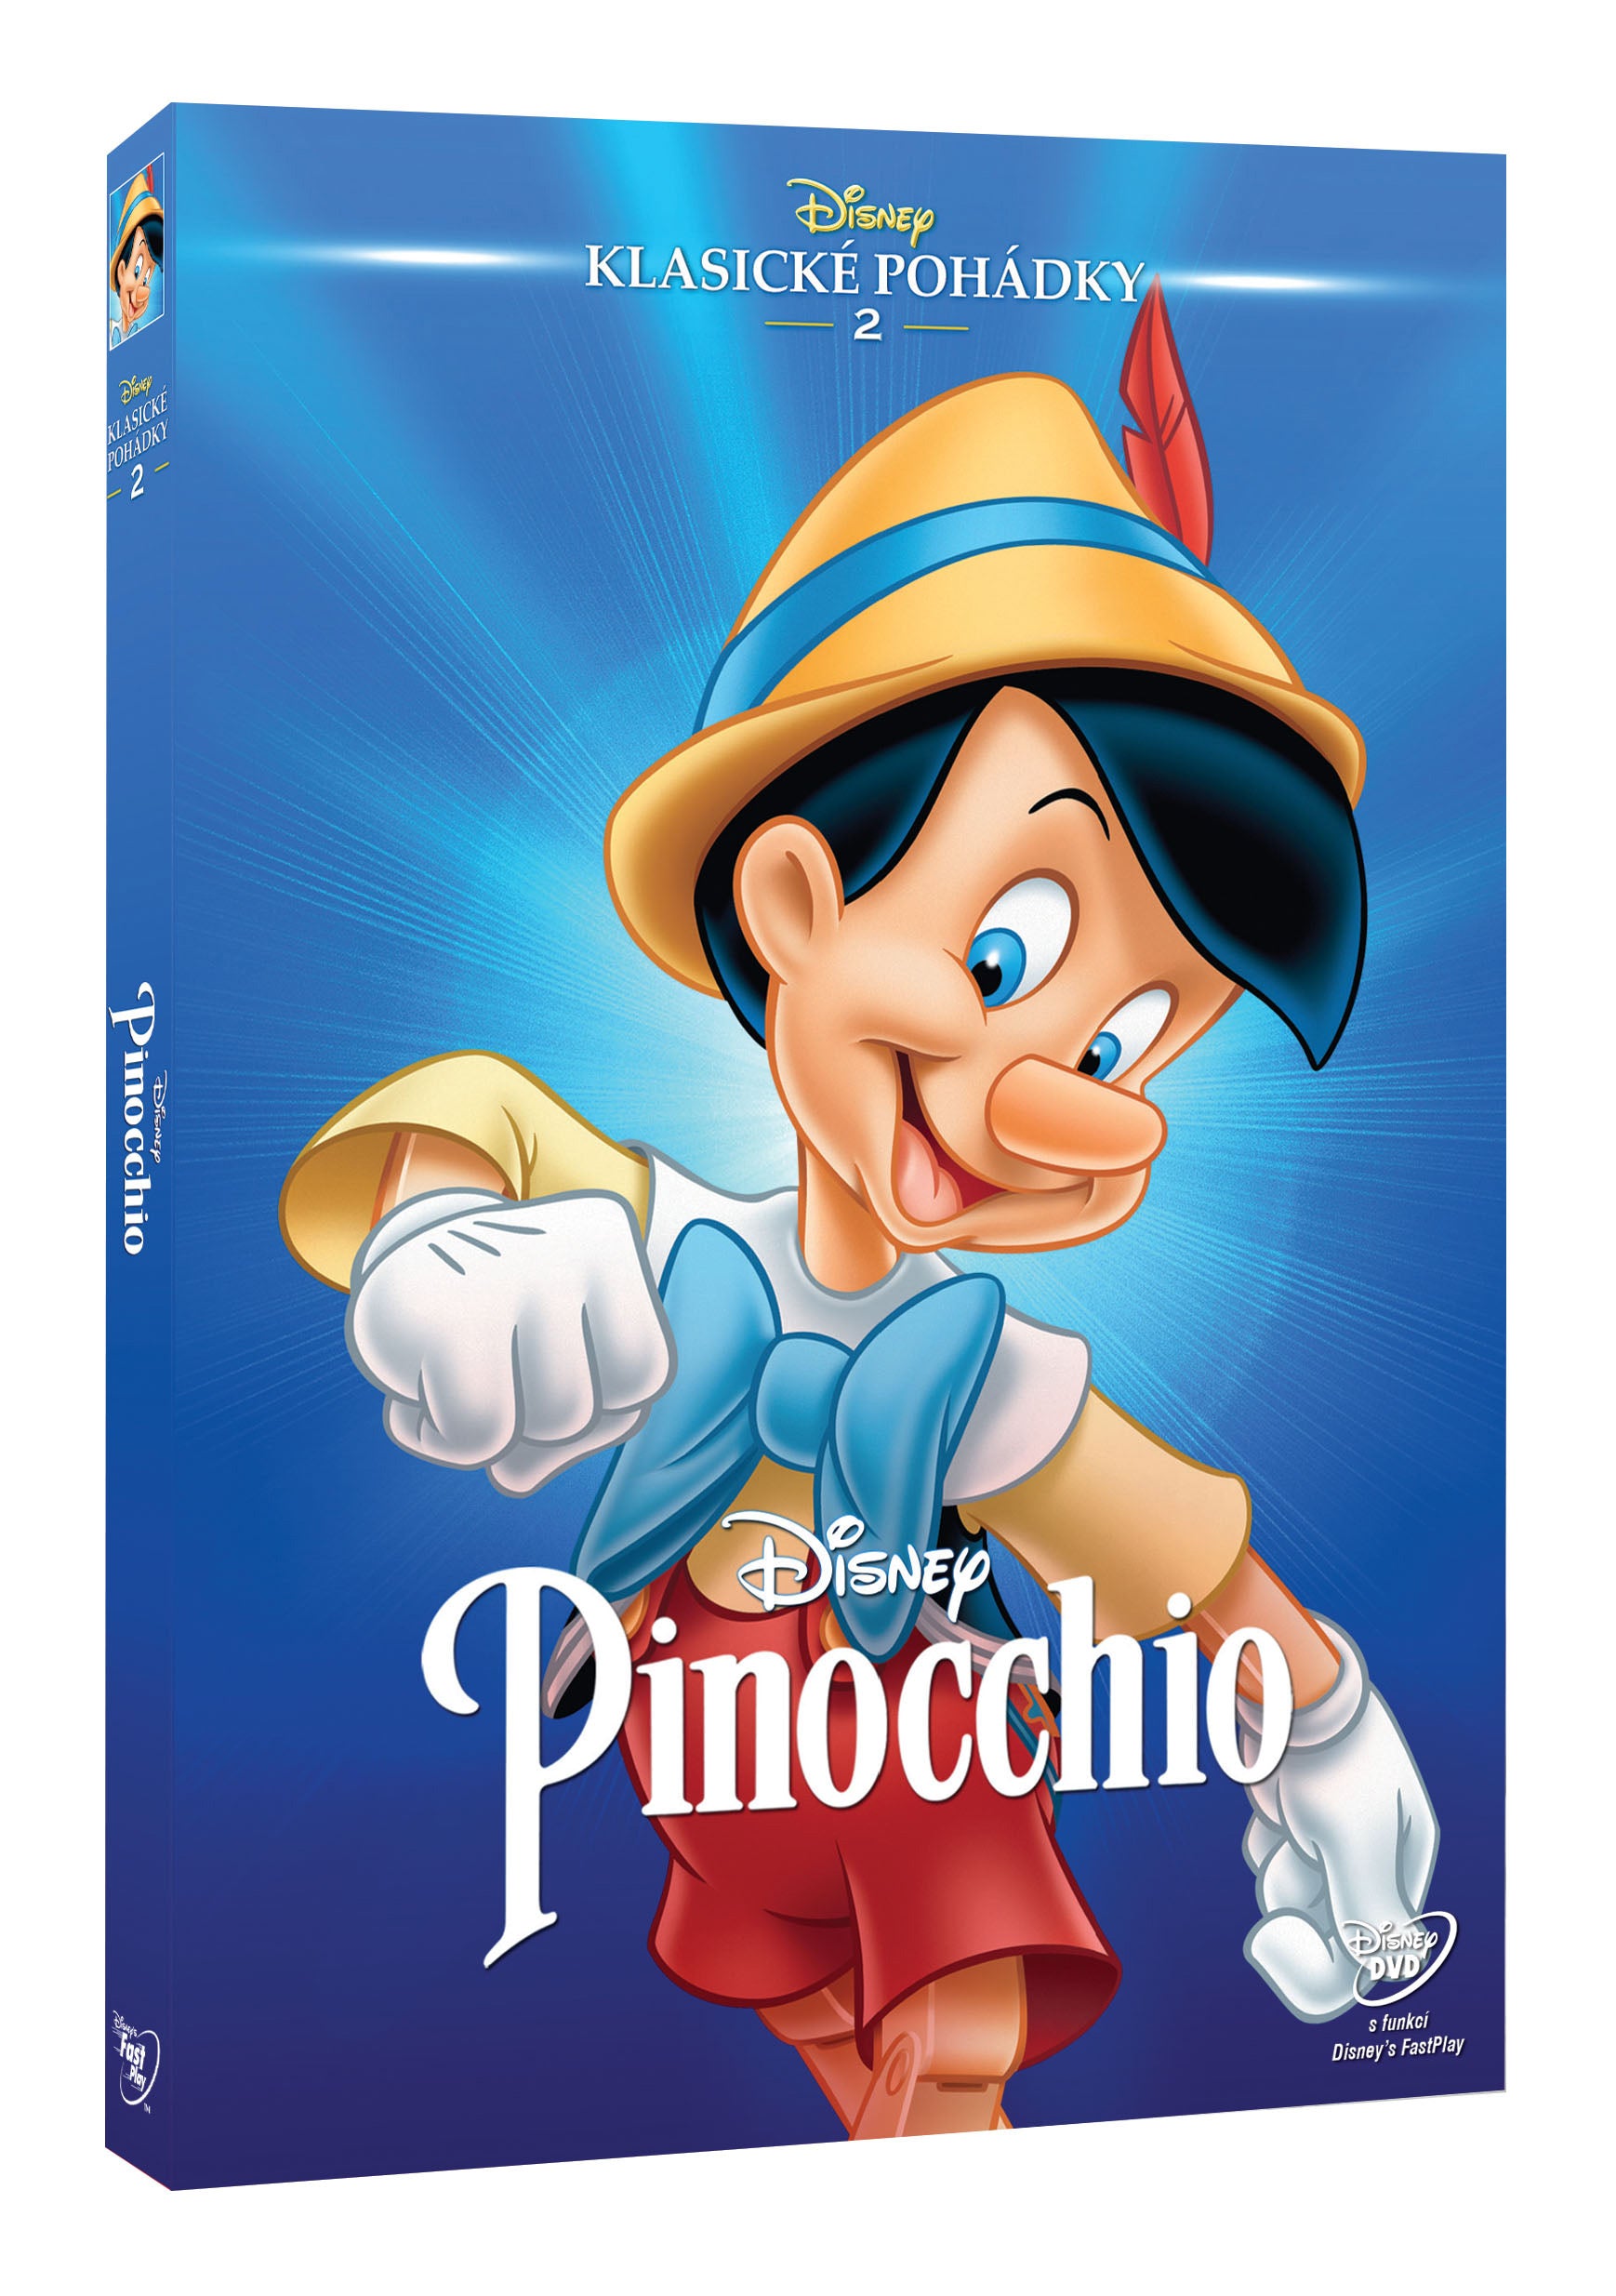 Pinocchio (1940) - Edice Disney klasicke pohadky 2. (Pinocchio)